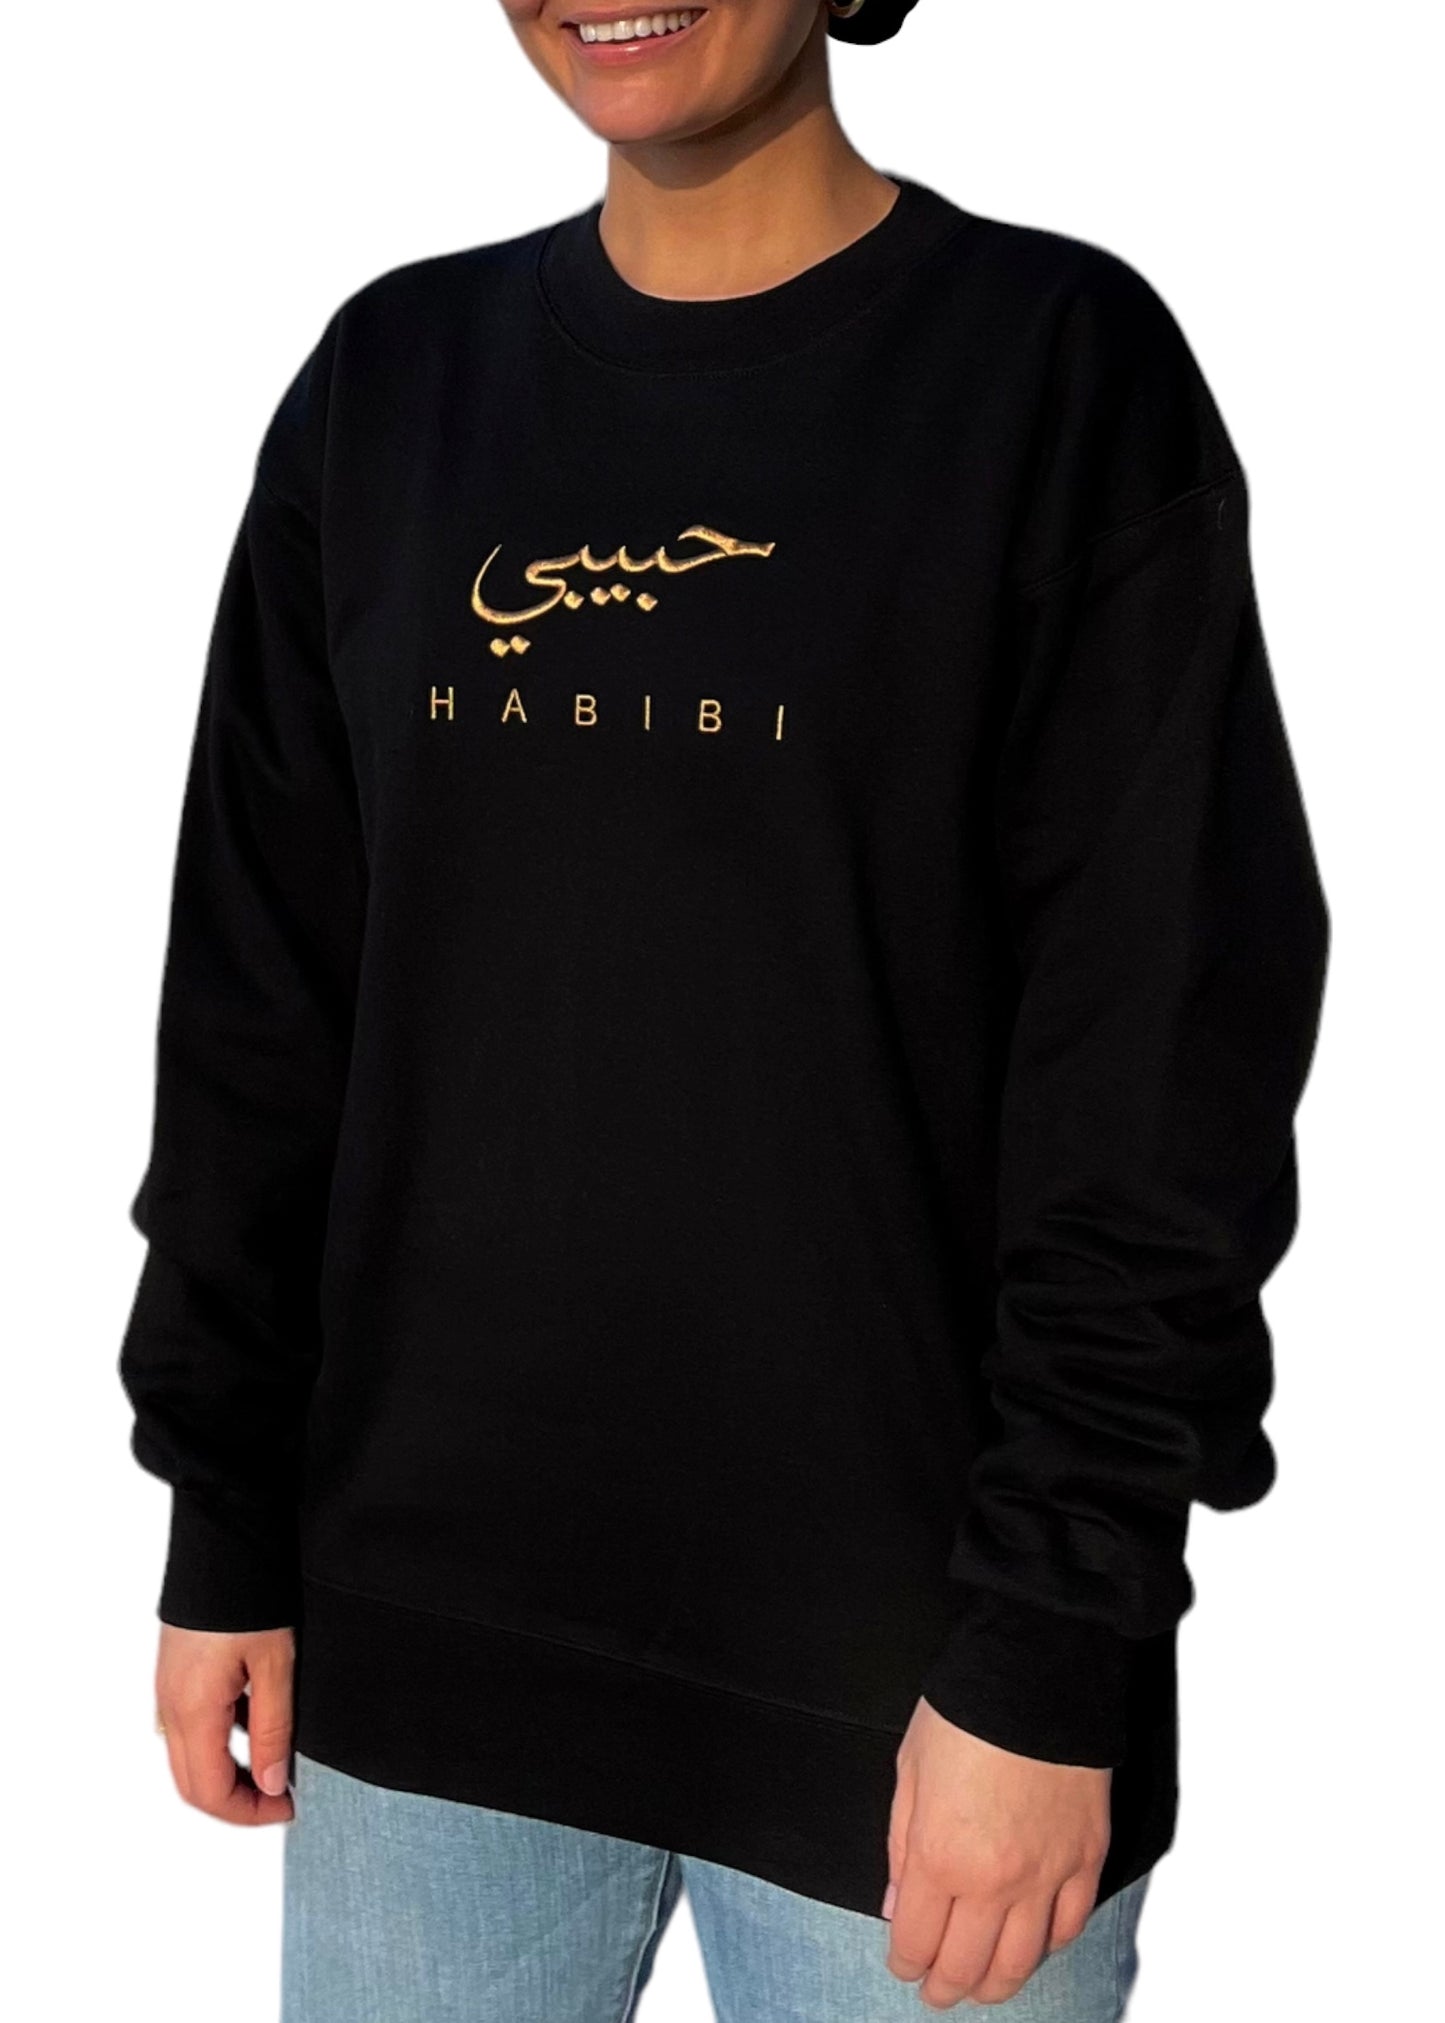 Habibi Arabic Writing Unisex Sweatshirt 